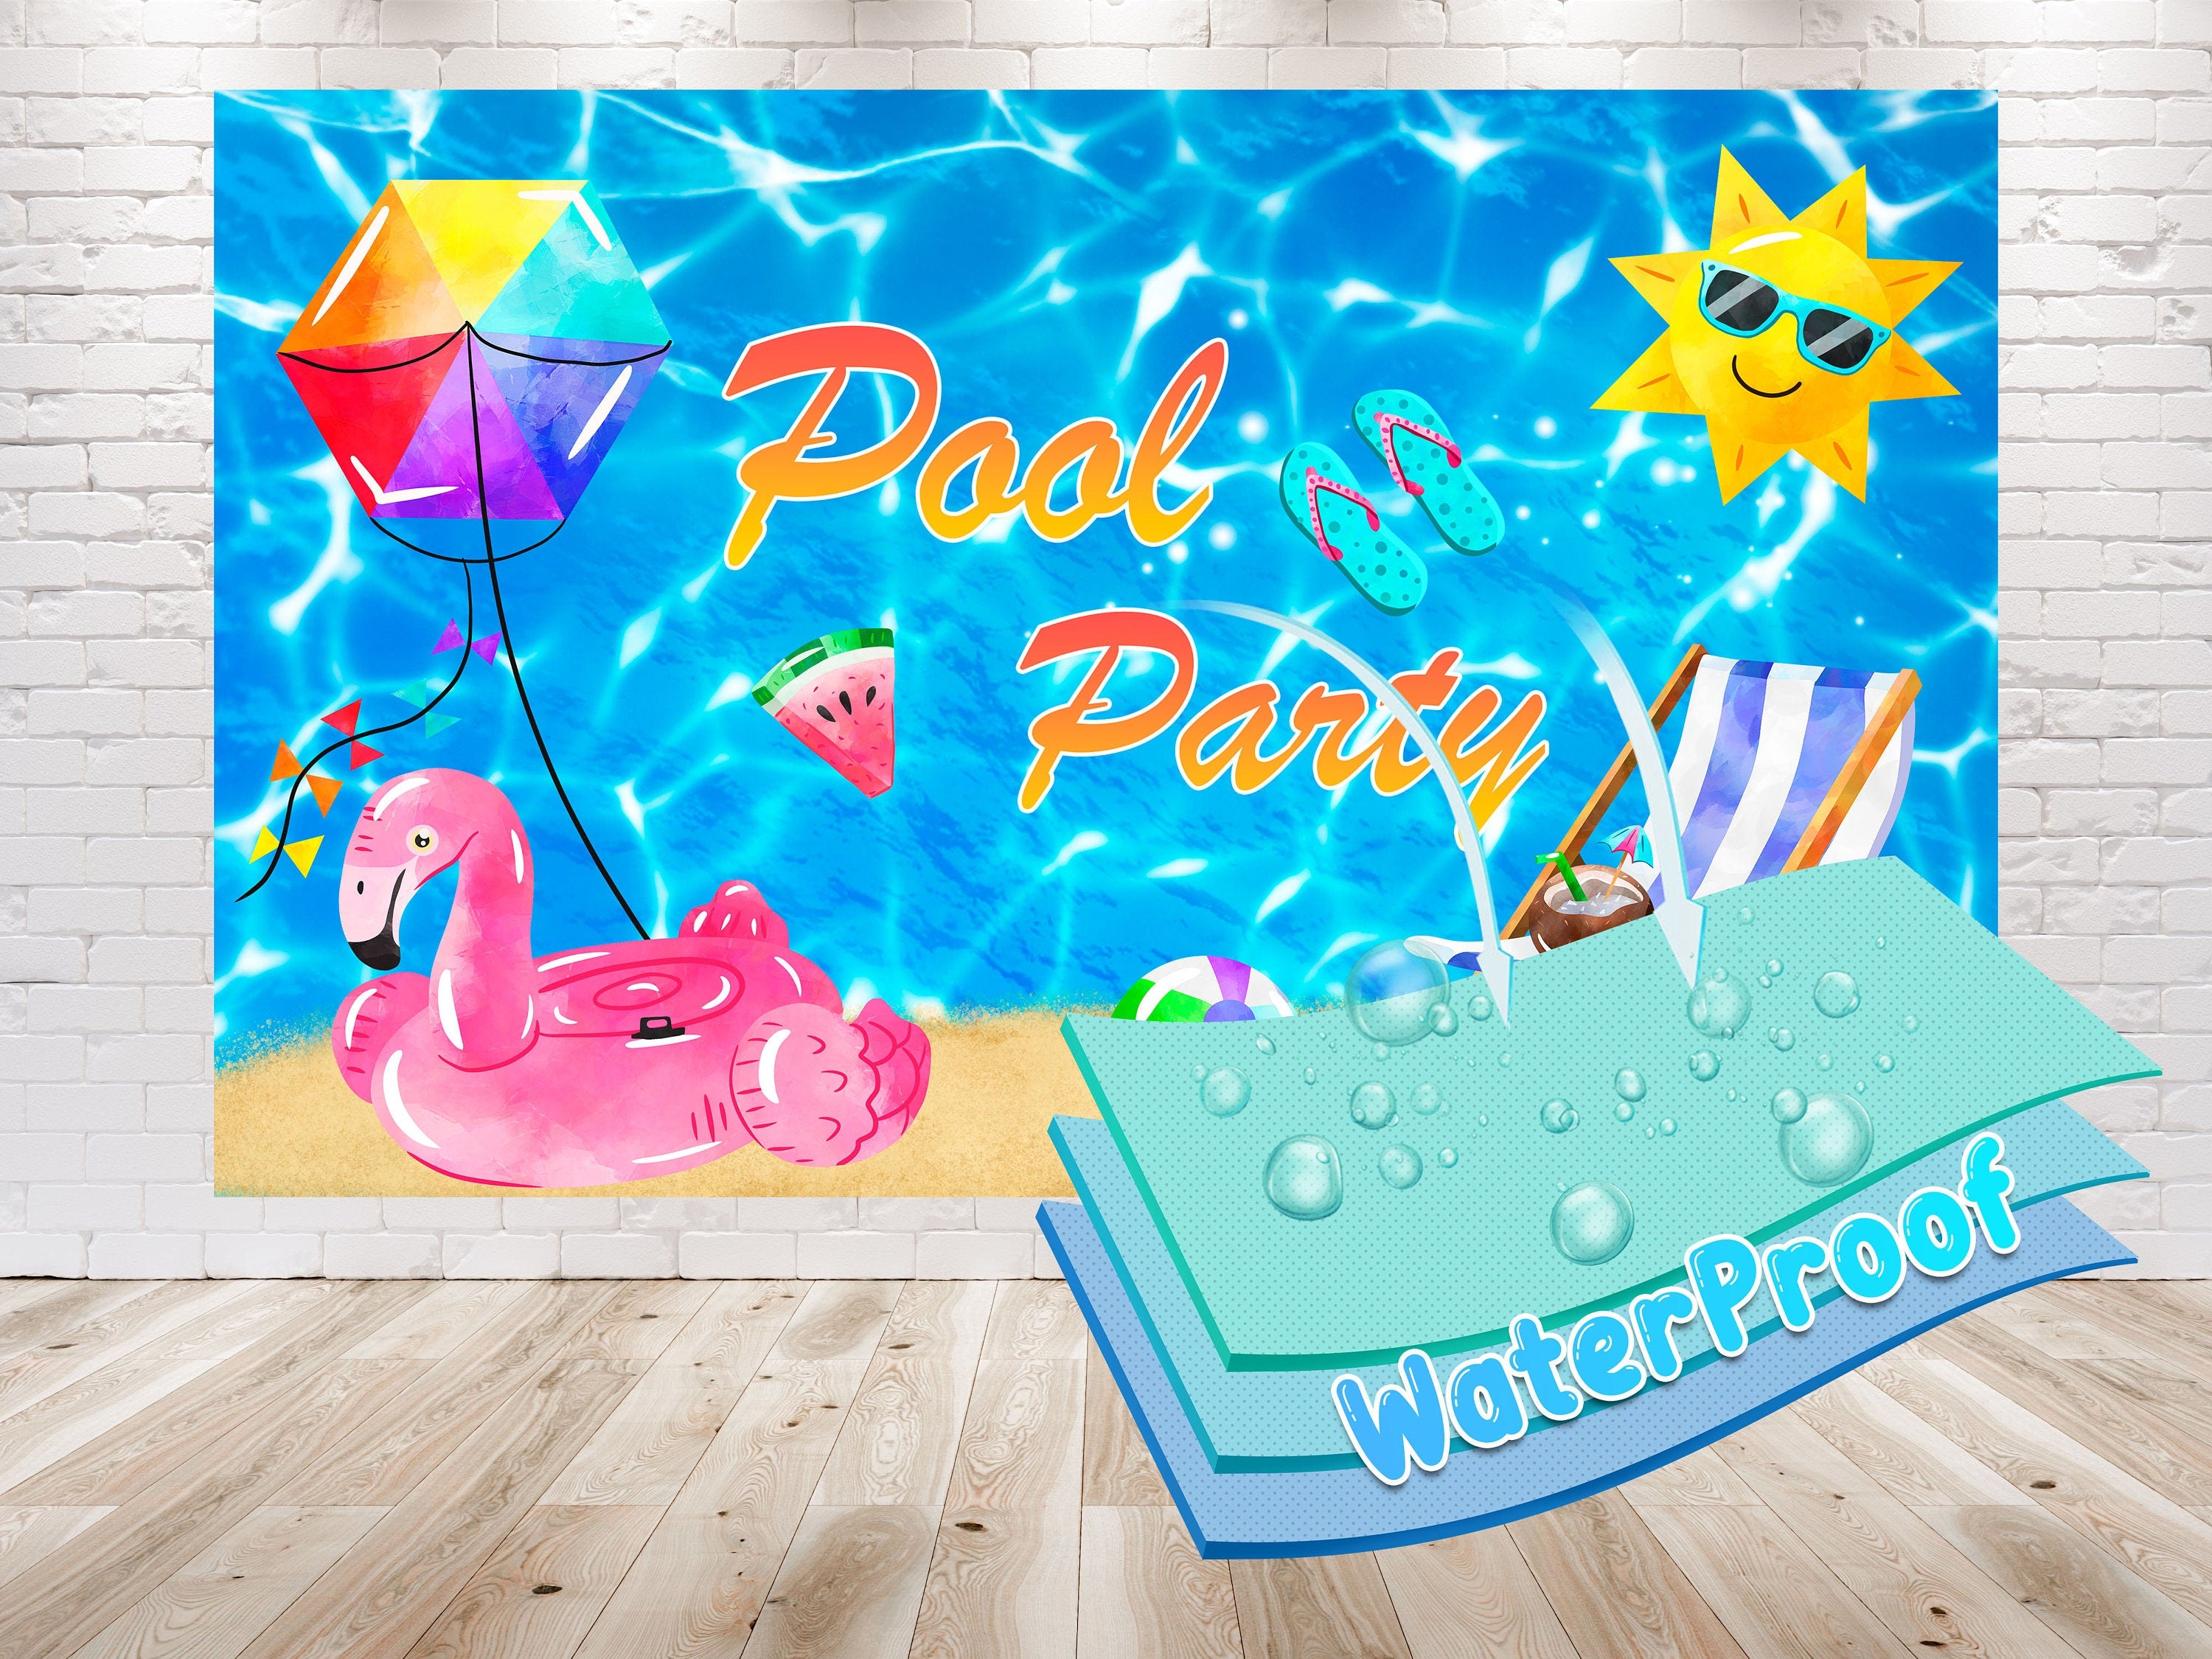 Pool Party Birthday Backdrop 5x3 FT - Fun Summer Beach Banner